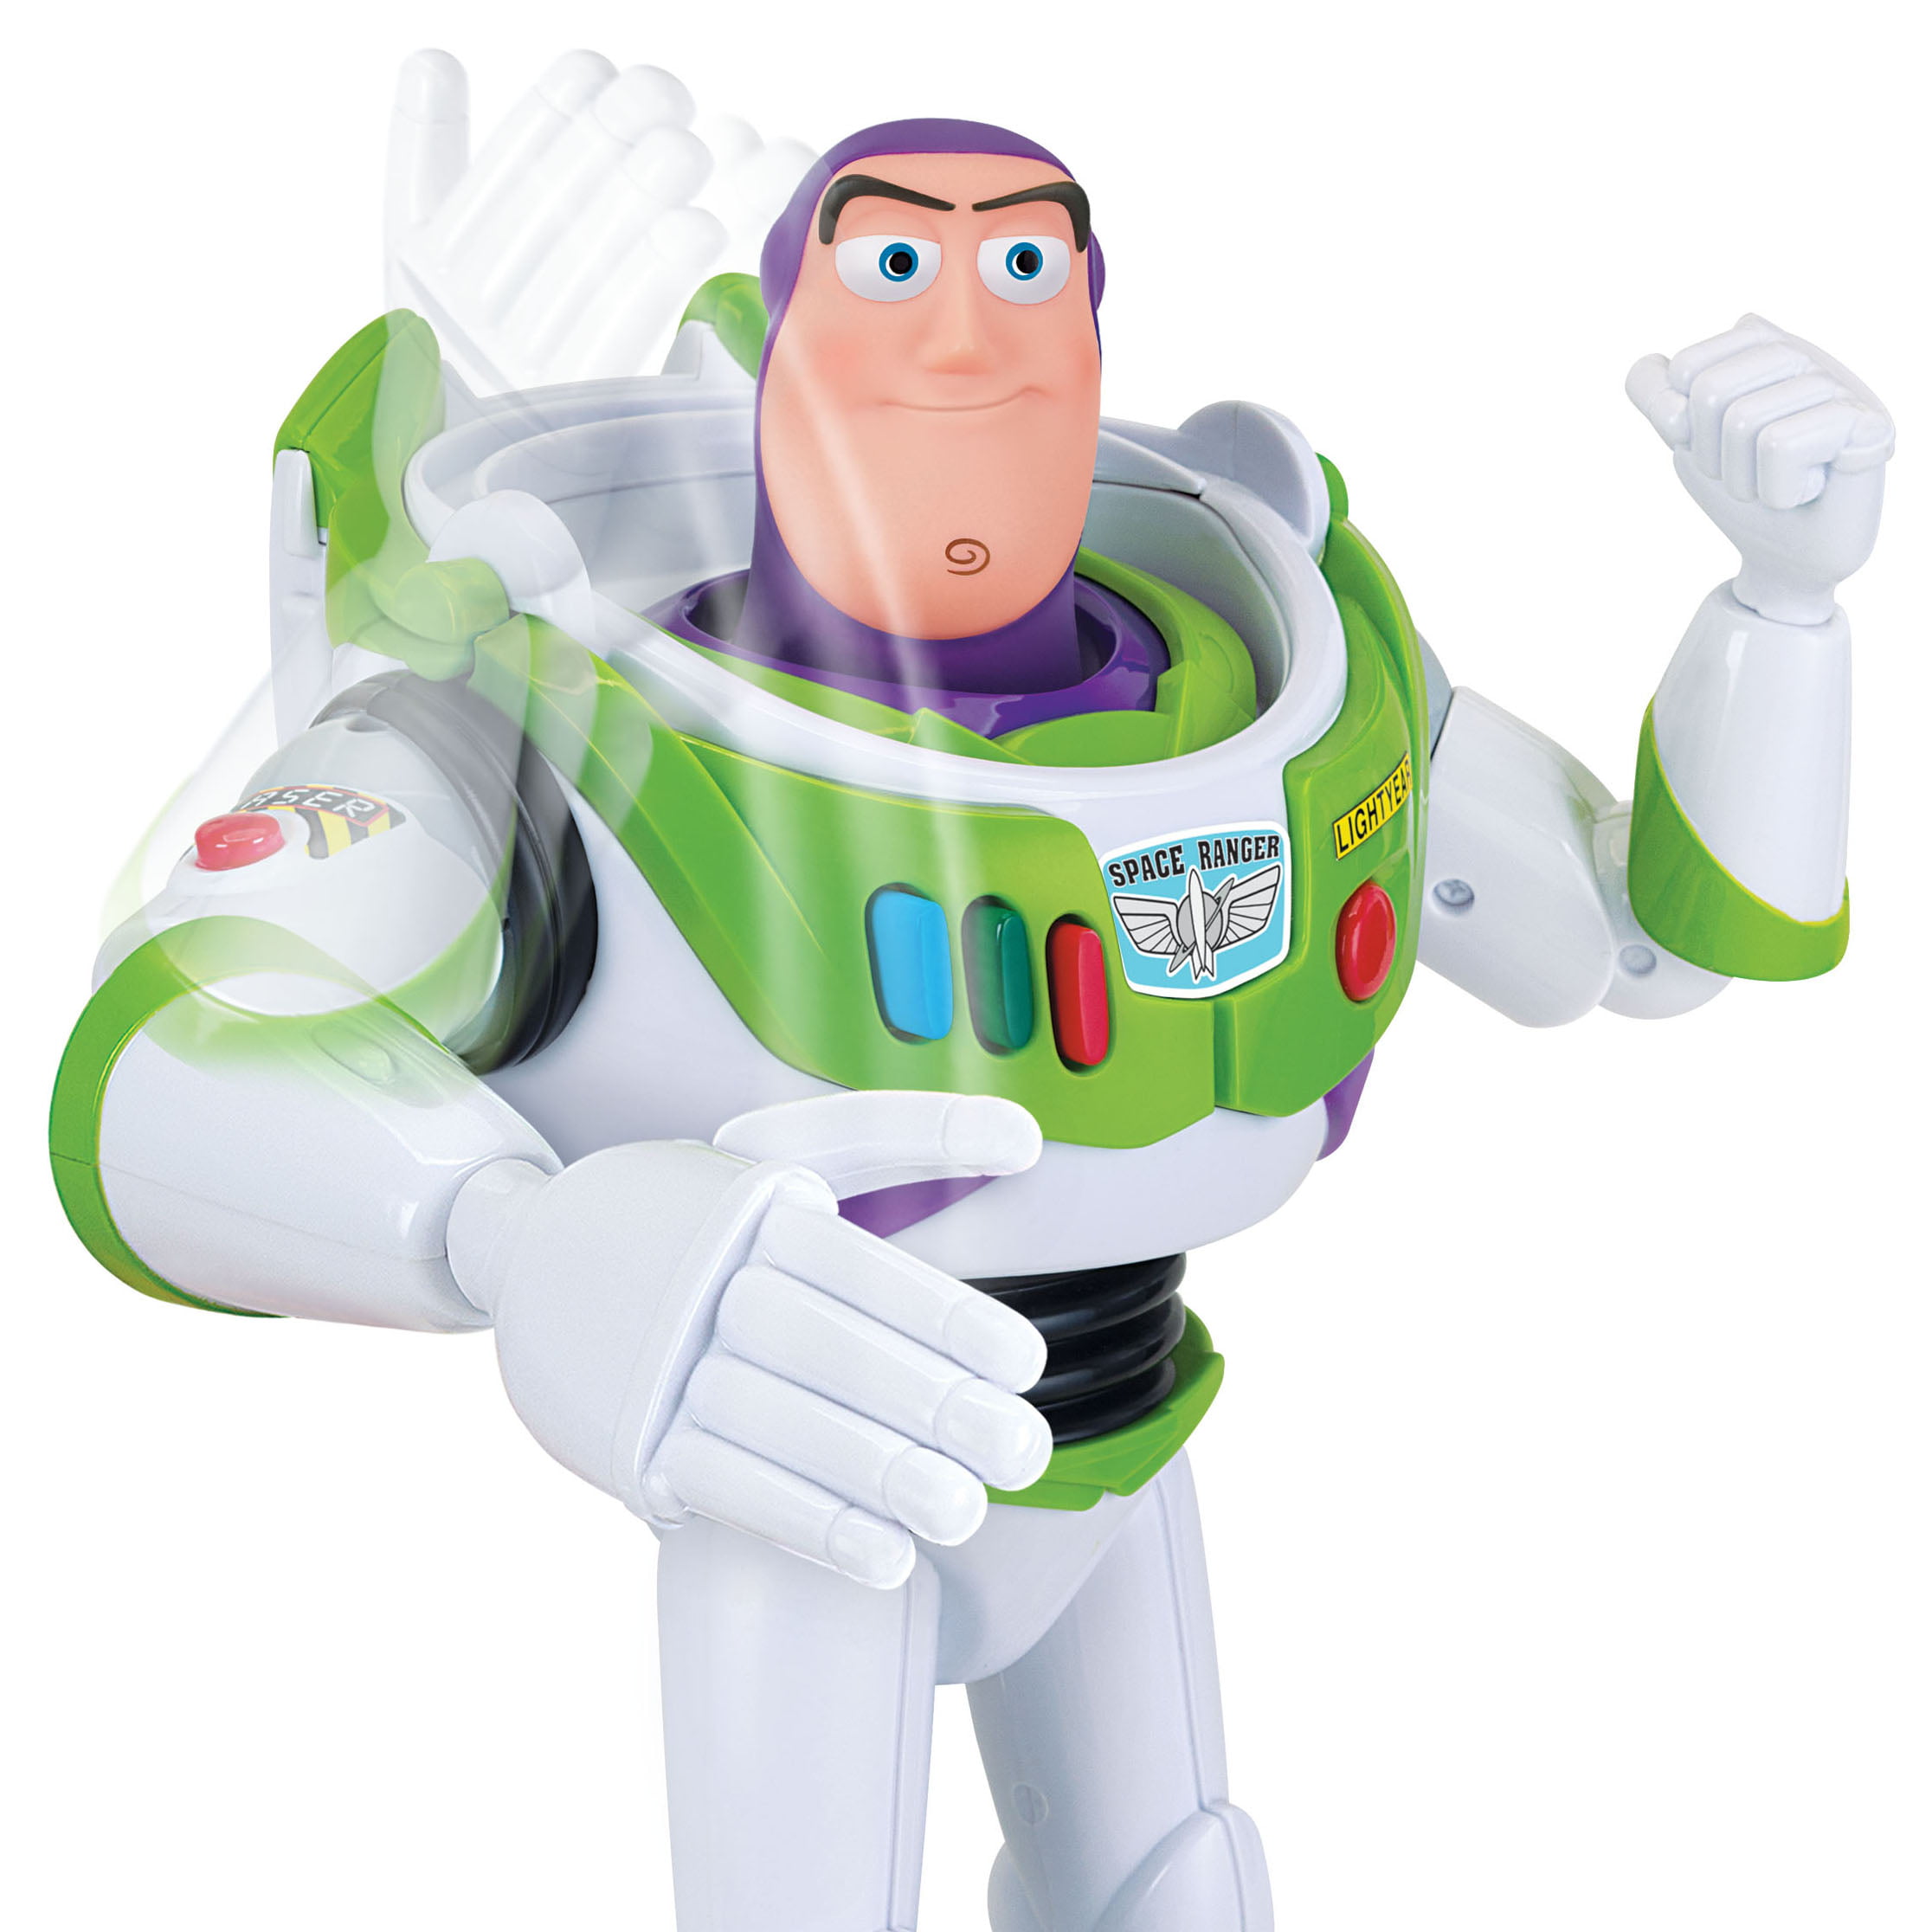 Buzz toy. Базз Toy story 4 игрушка. Базз Лайтер космонавты. Робот Базз Лайтер. Базз Лайтер игрушка.